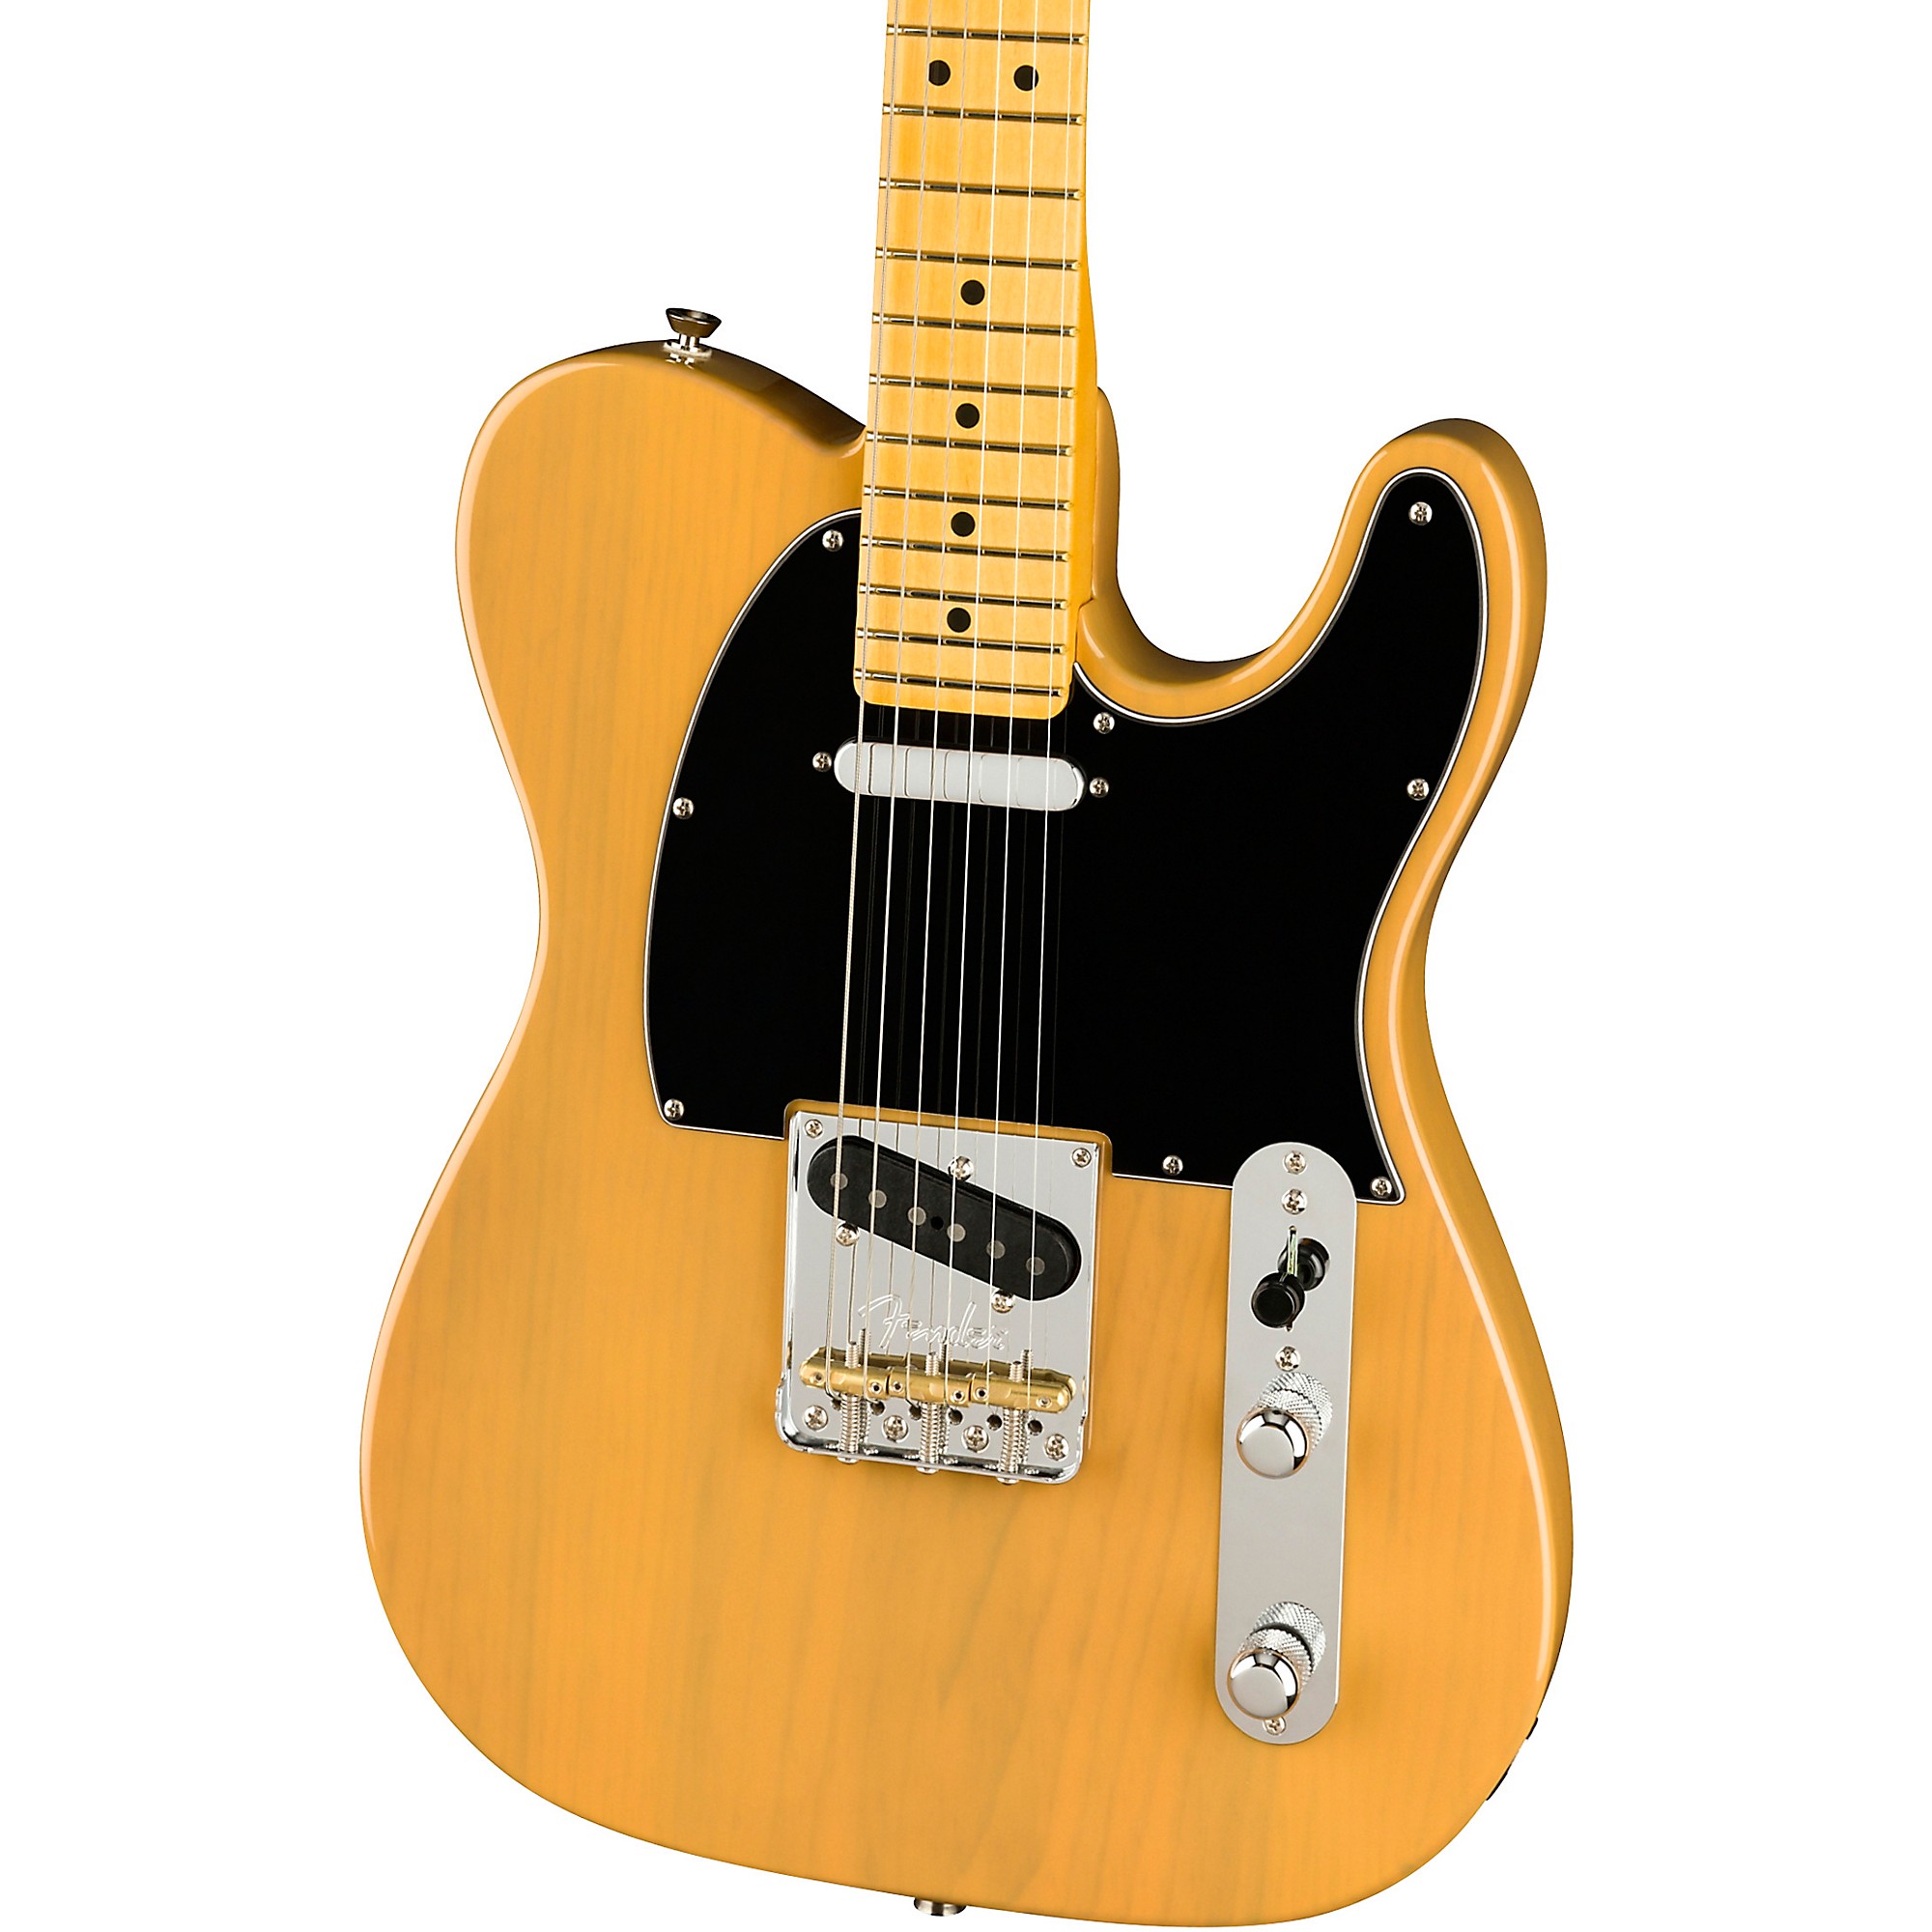 Fender American Professional II Telecaster Maple Fingerboard